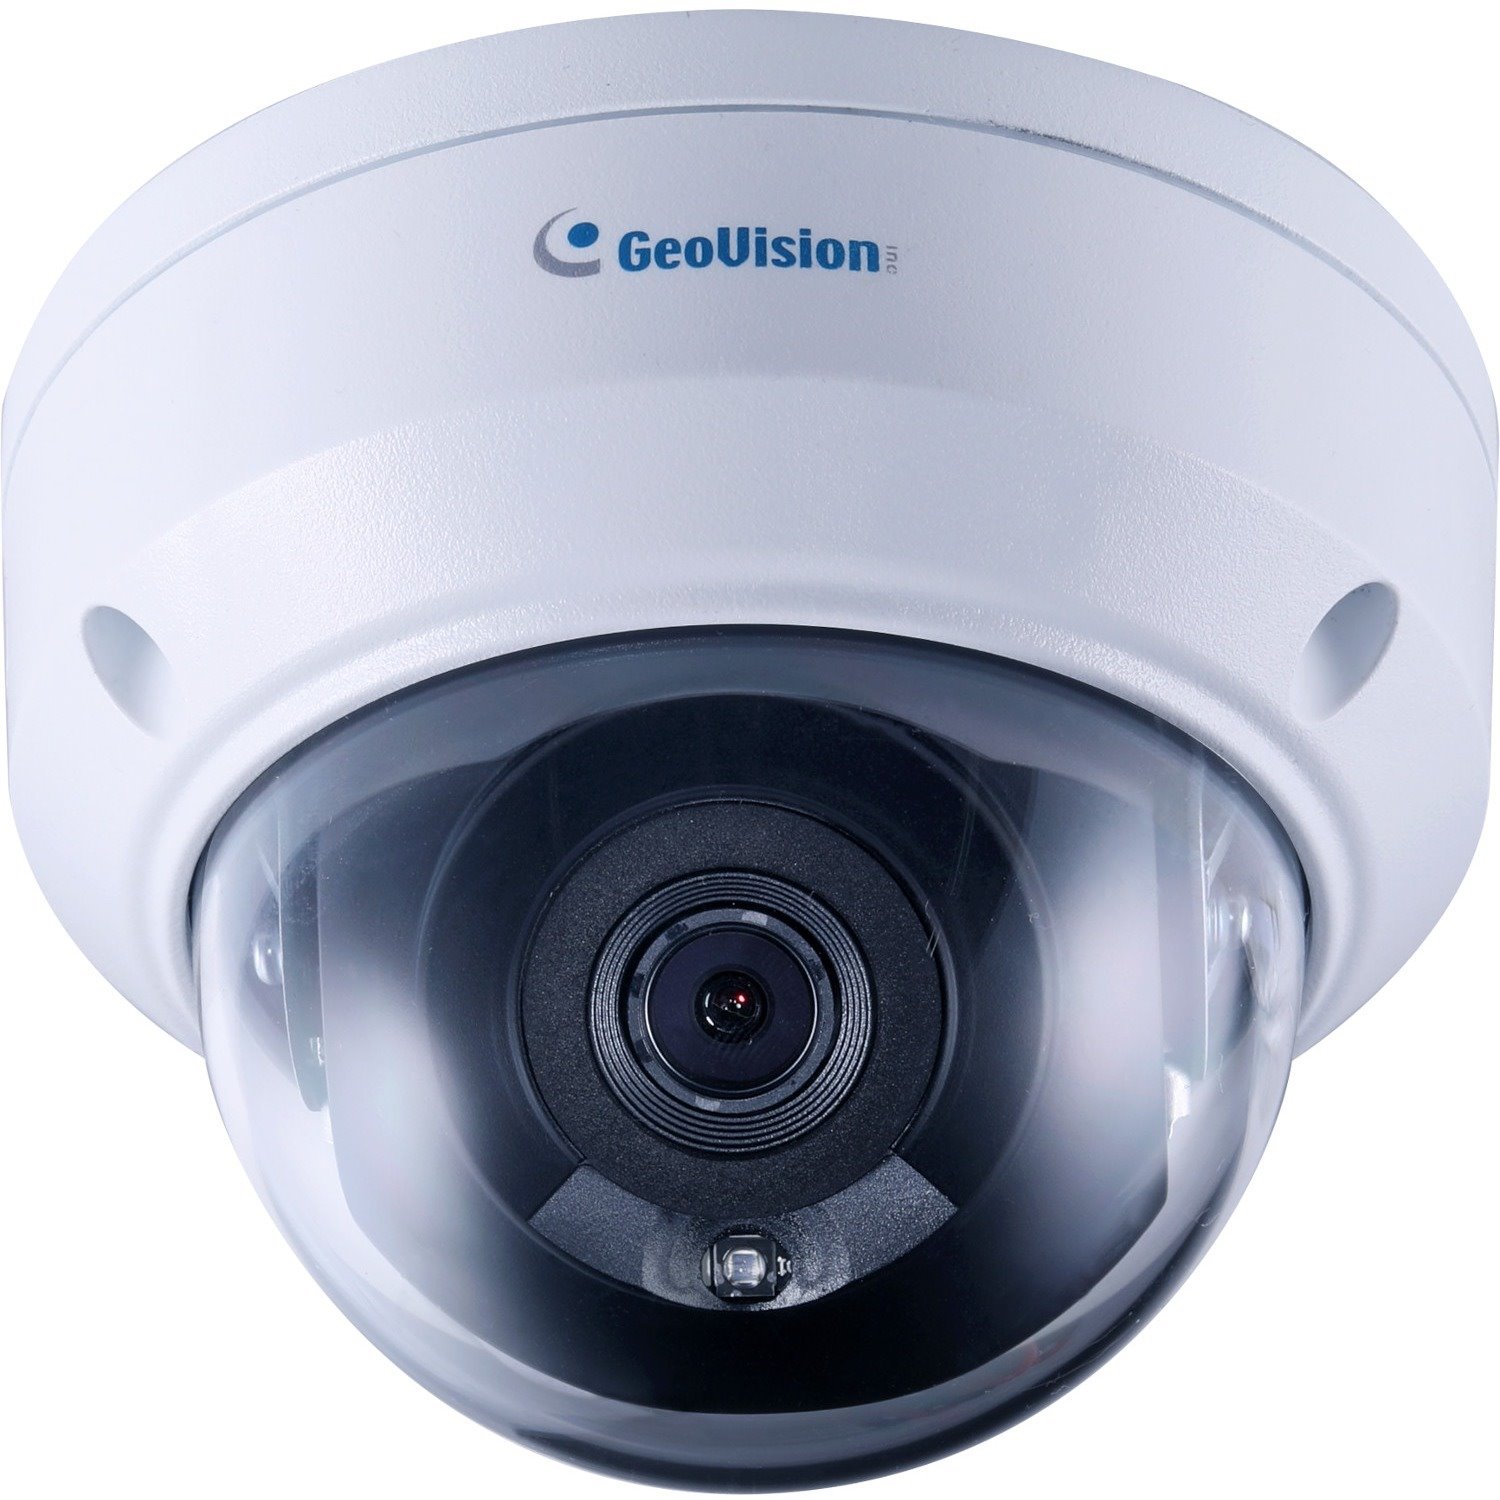 GeoVision GV-TDR4703-2F 4 Megapixel Outdoor Network Camera - Color - Mini Dome